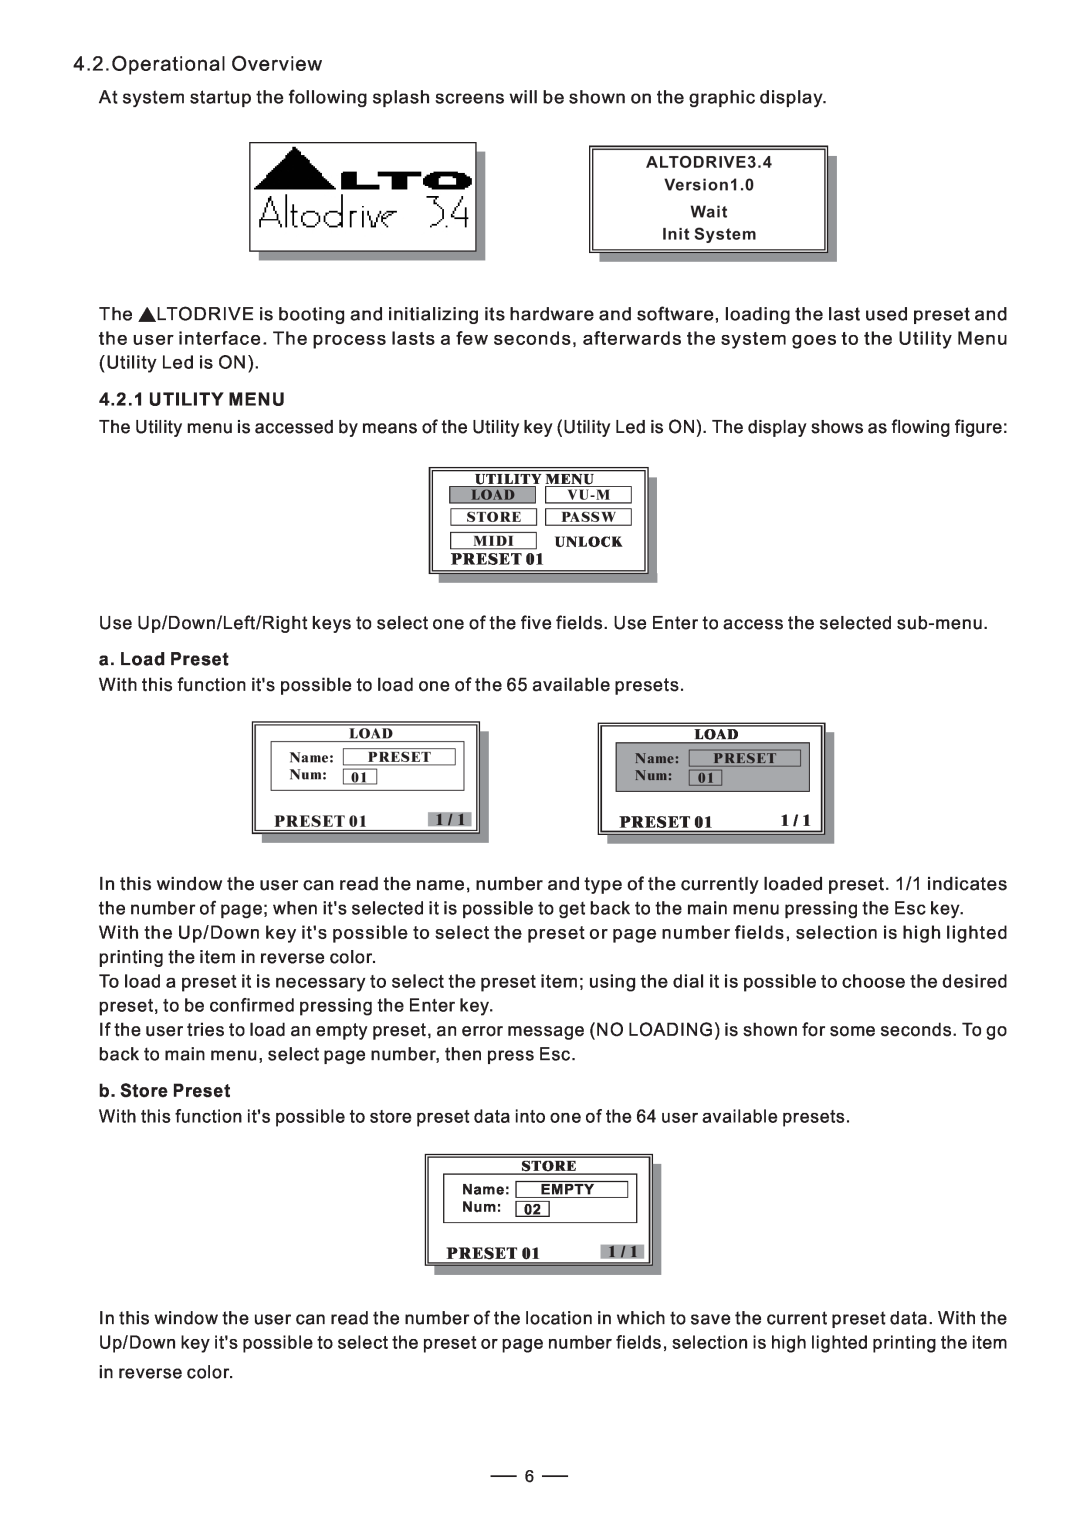 Nilfisk-ALTO DIGITAL X OVER user manual Operational Overview, Utility Menu, a. Load Preset, b. Store Preset 